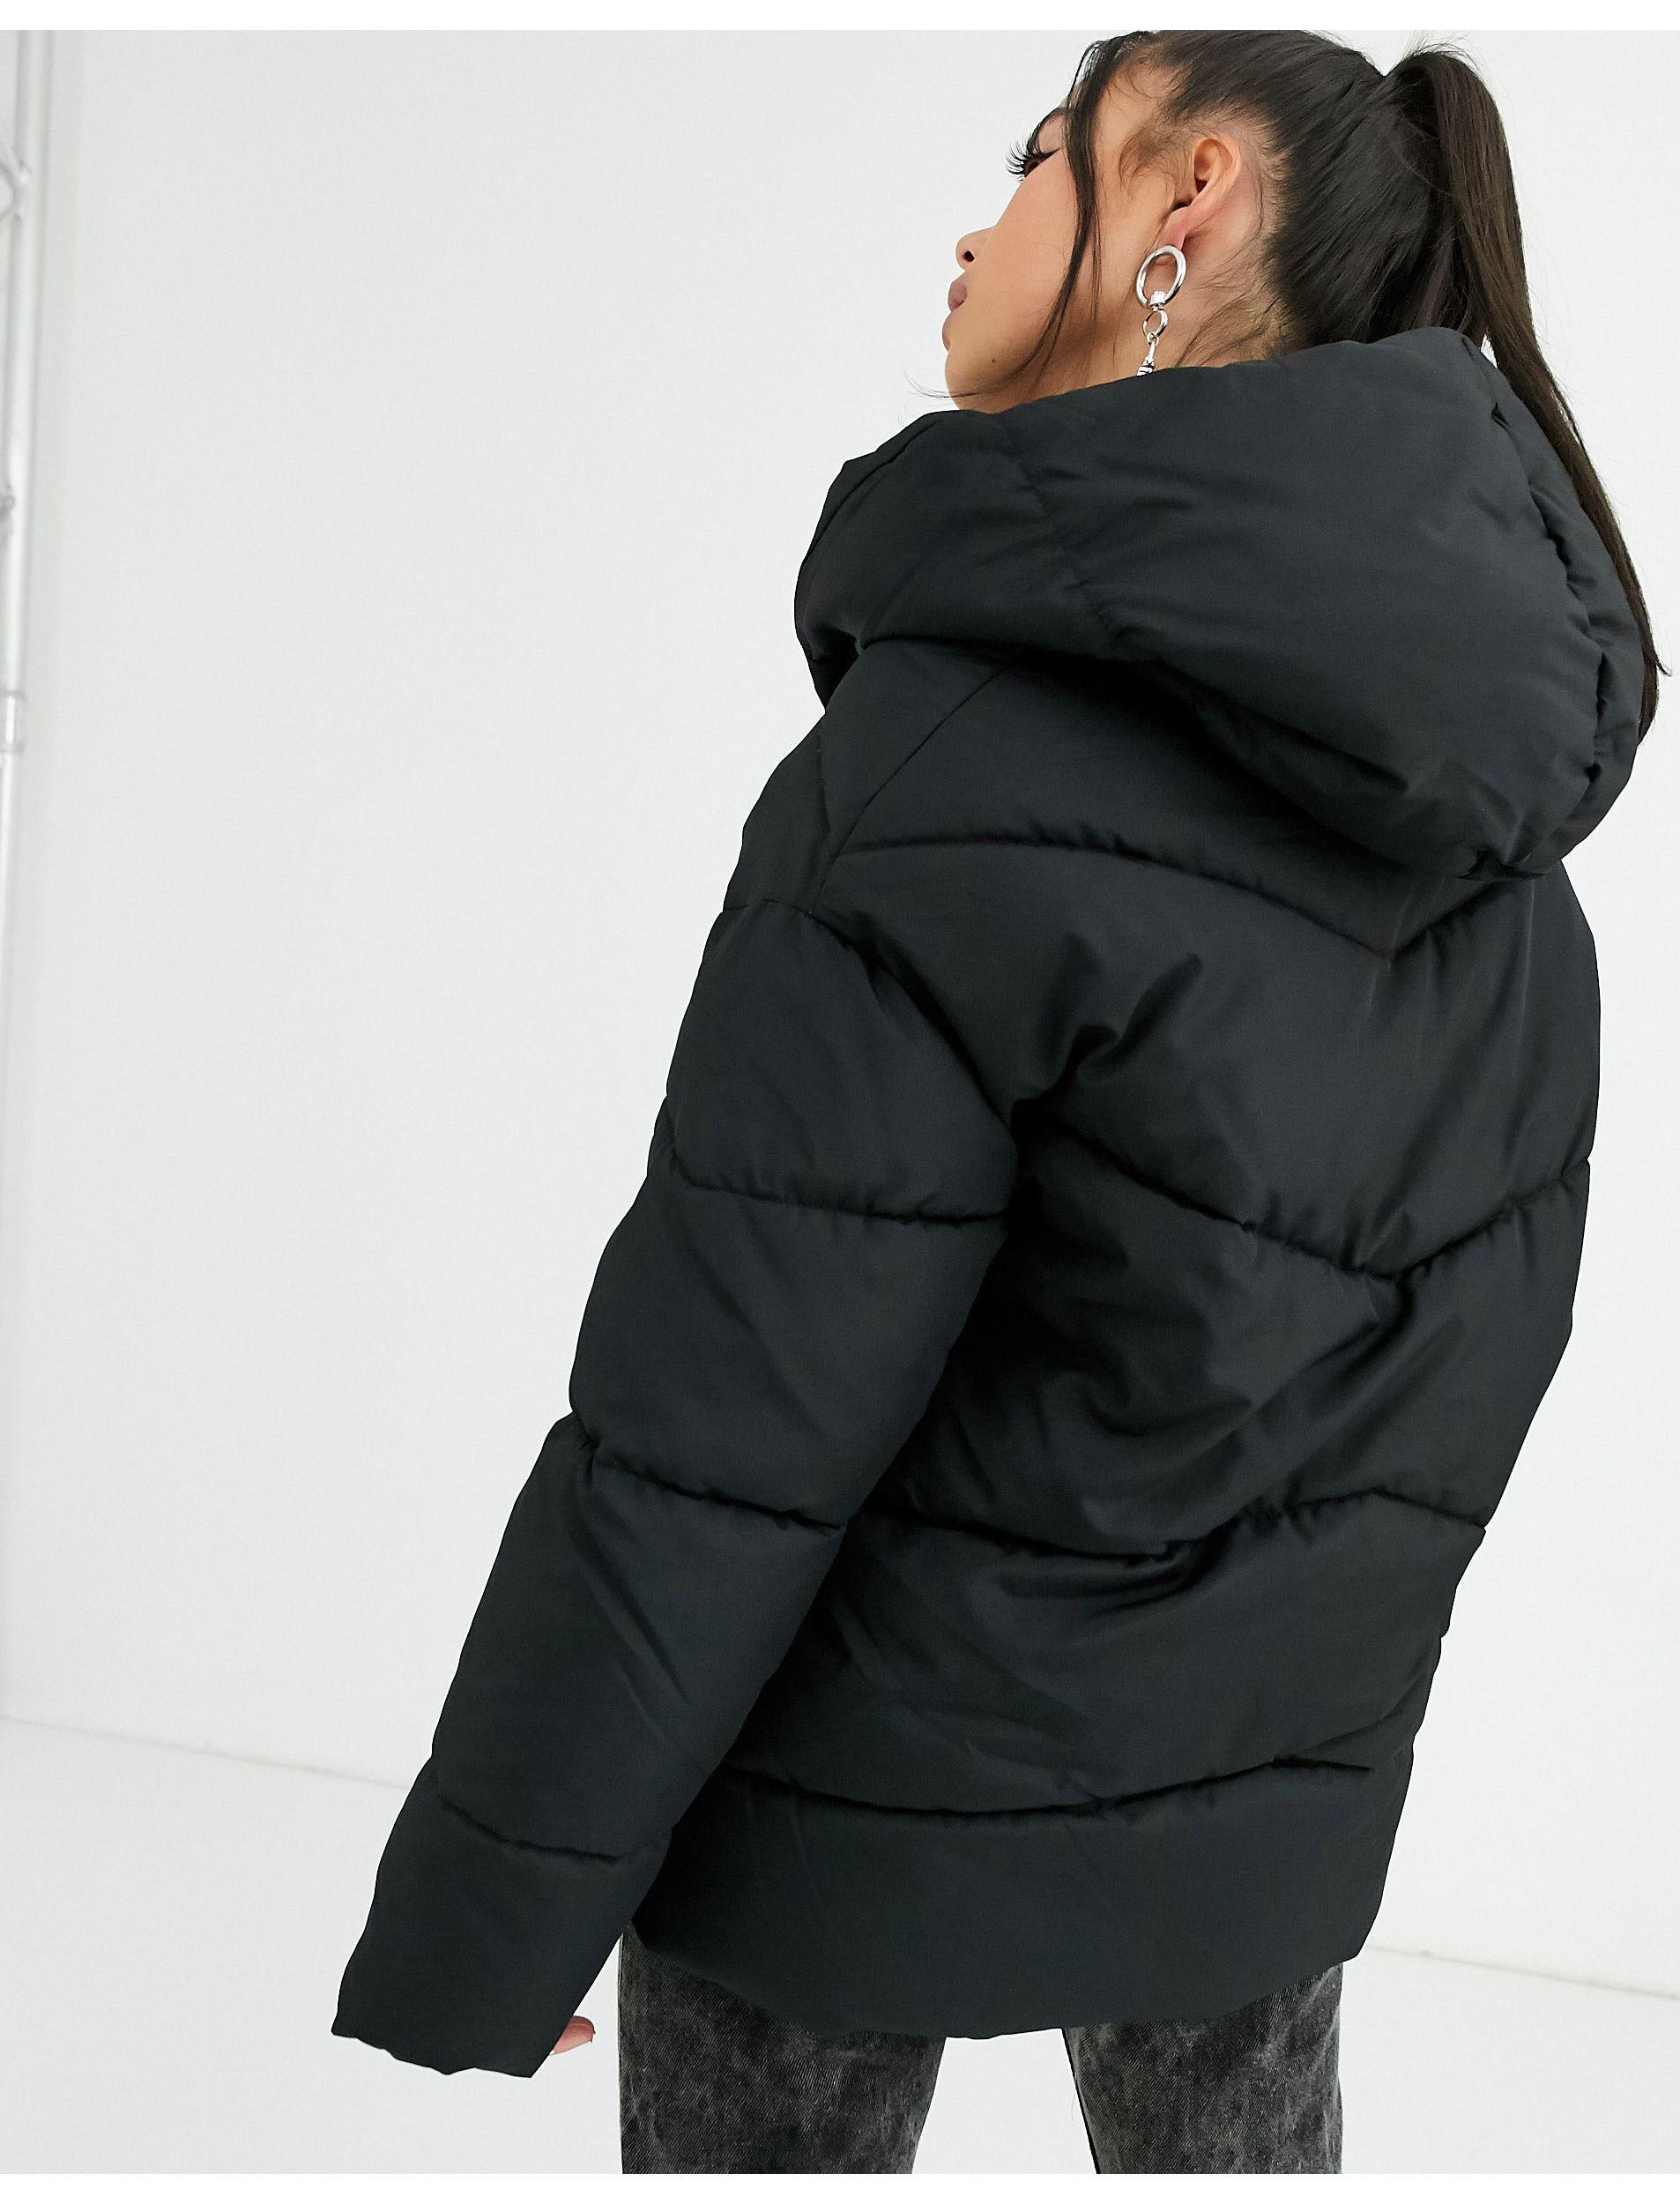 Jacket Bershka Femme Great, 54% OFF | worldkhobor.com